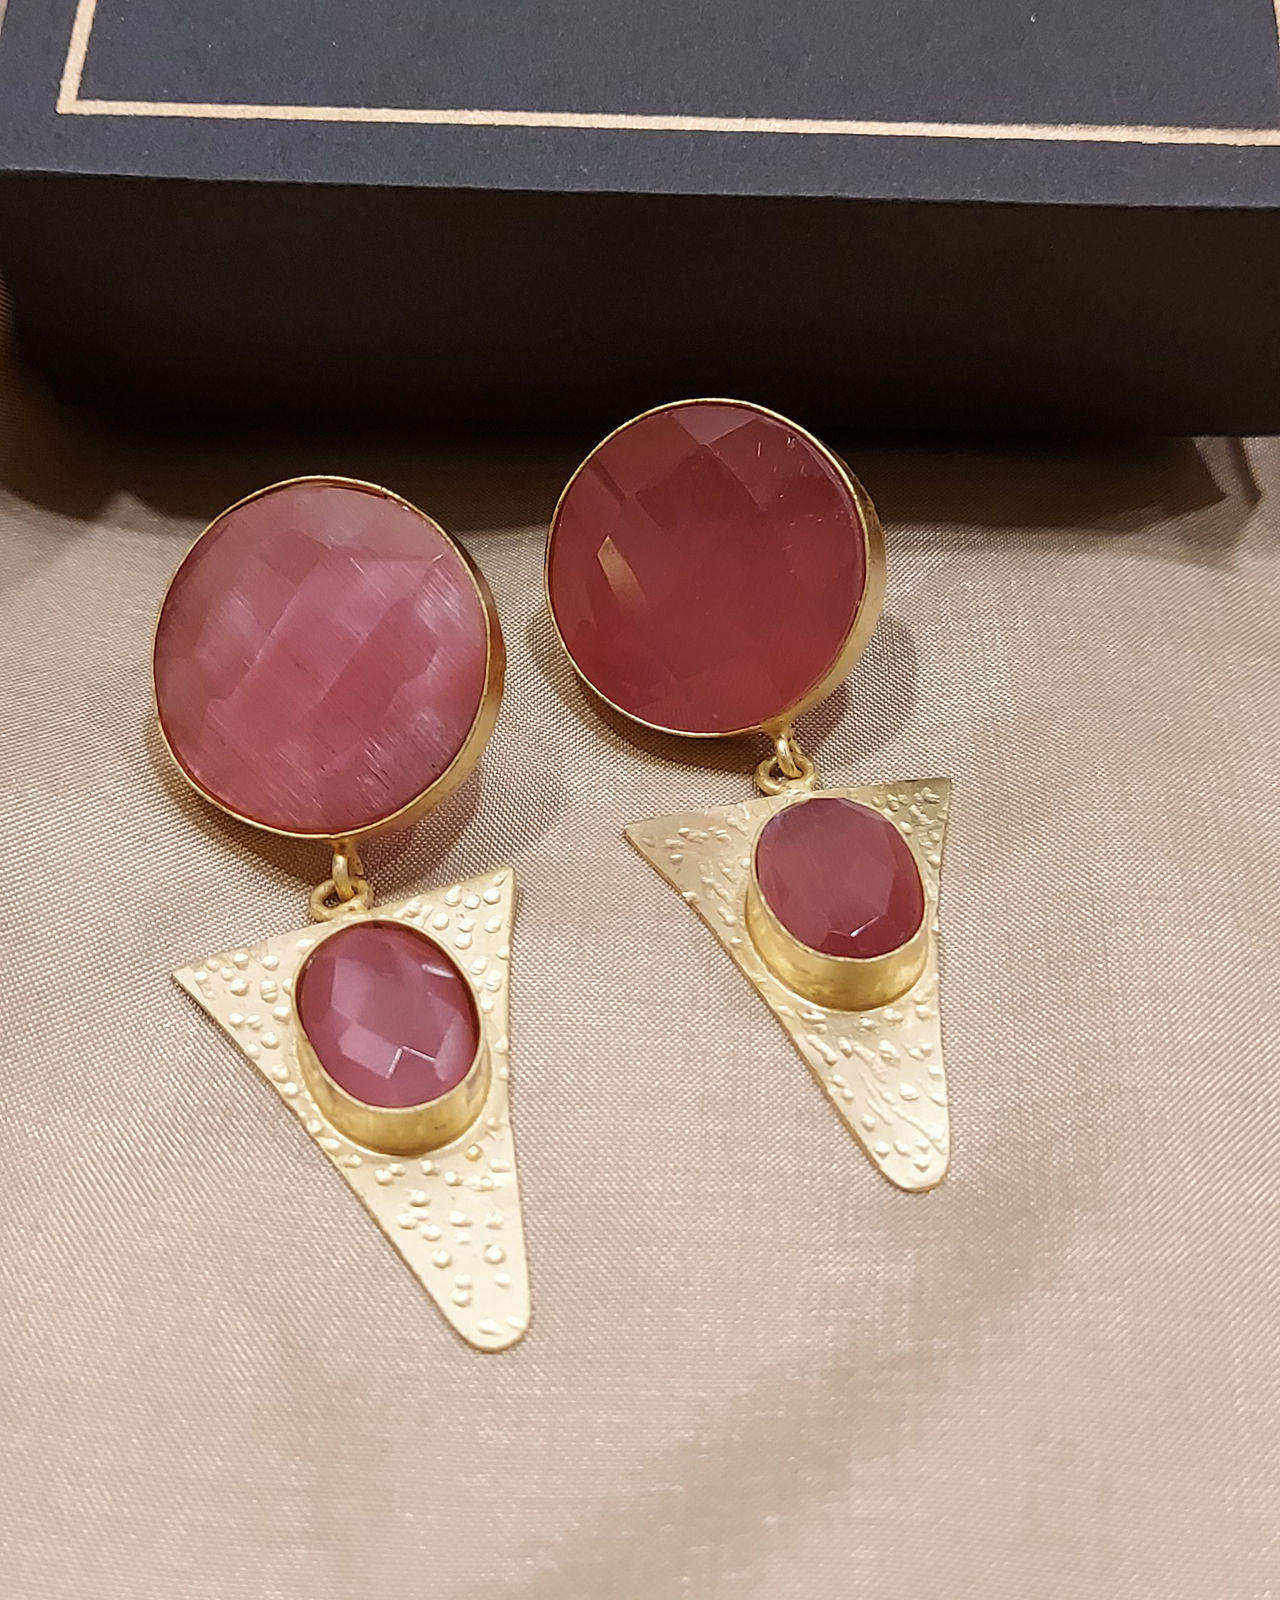 Earrings-for-women-handcrafted-by-Ritika-Goel-all-metal-22K-GOLD-earring-jewelery-Shenaro_Lifestyle-RGE0206-2